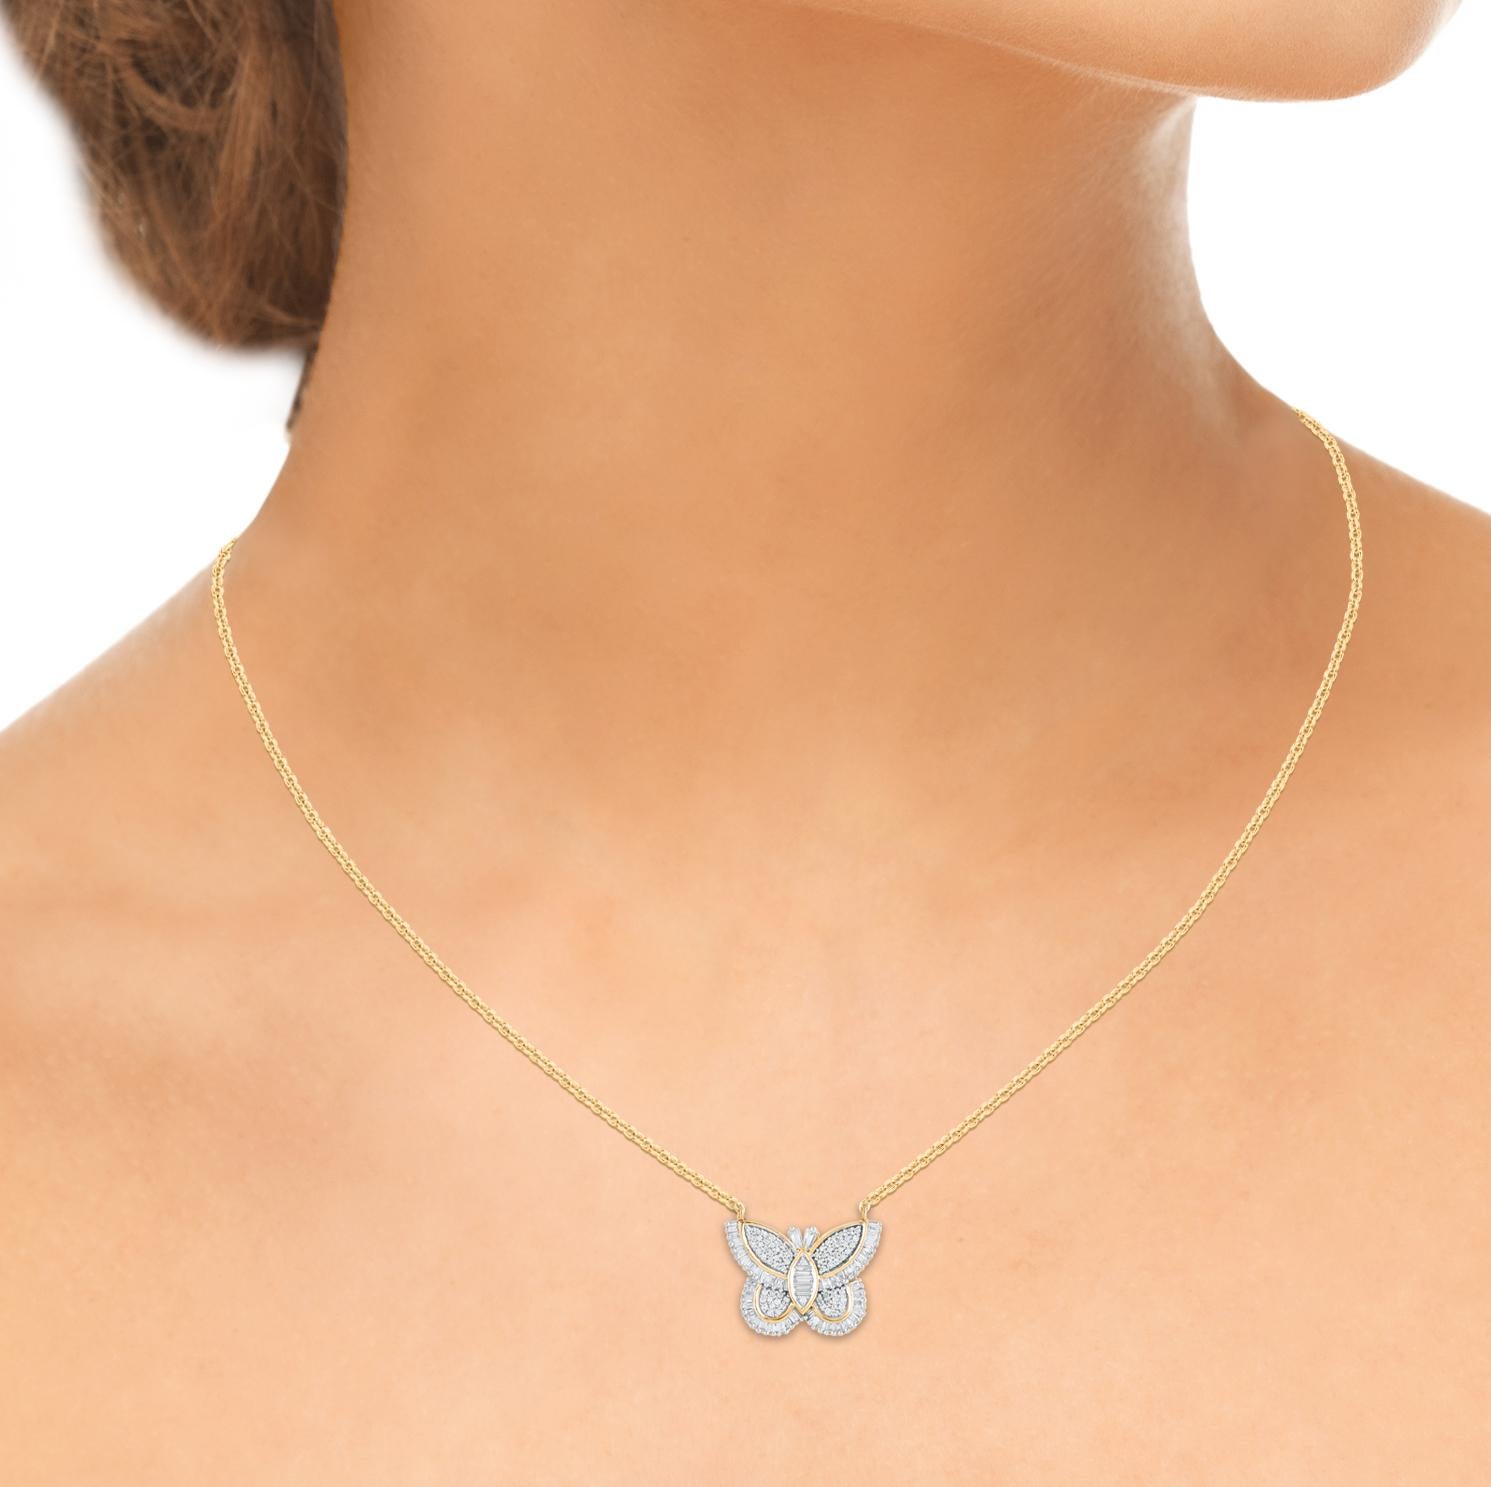 Baguette Cut TJD 0.60 Carat Baguette Diamond Butterfly Pendant Necklace in 14KT Yellow Gold For Sale